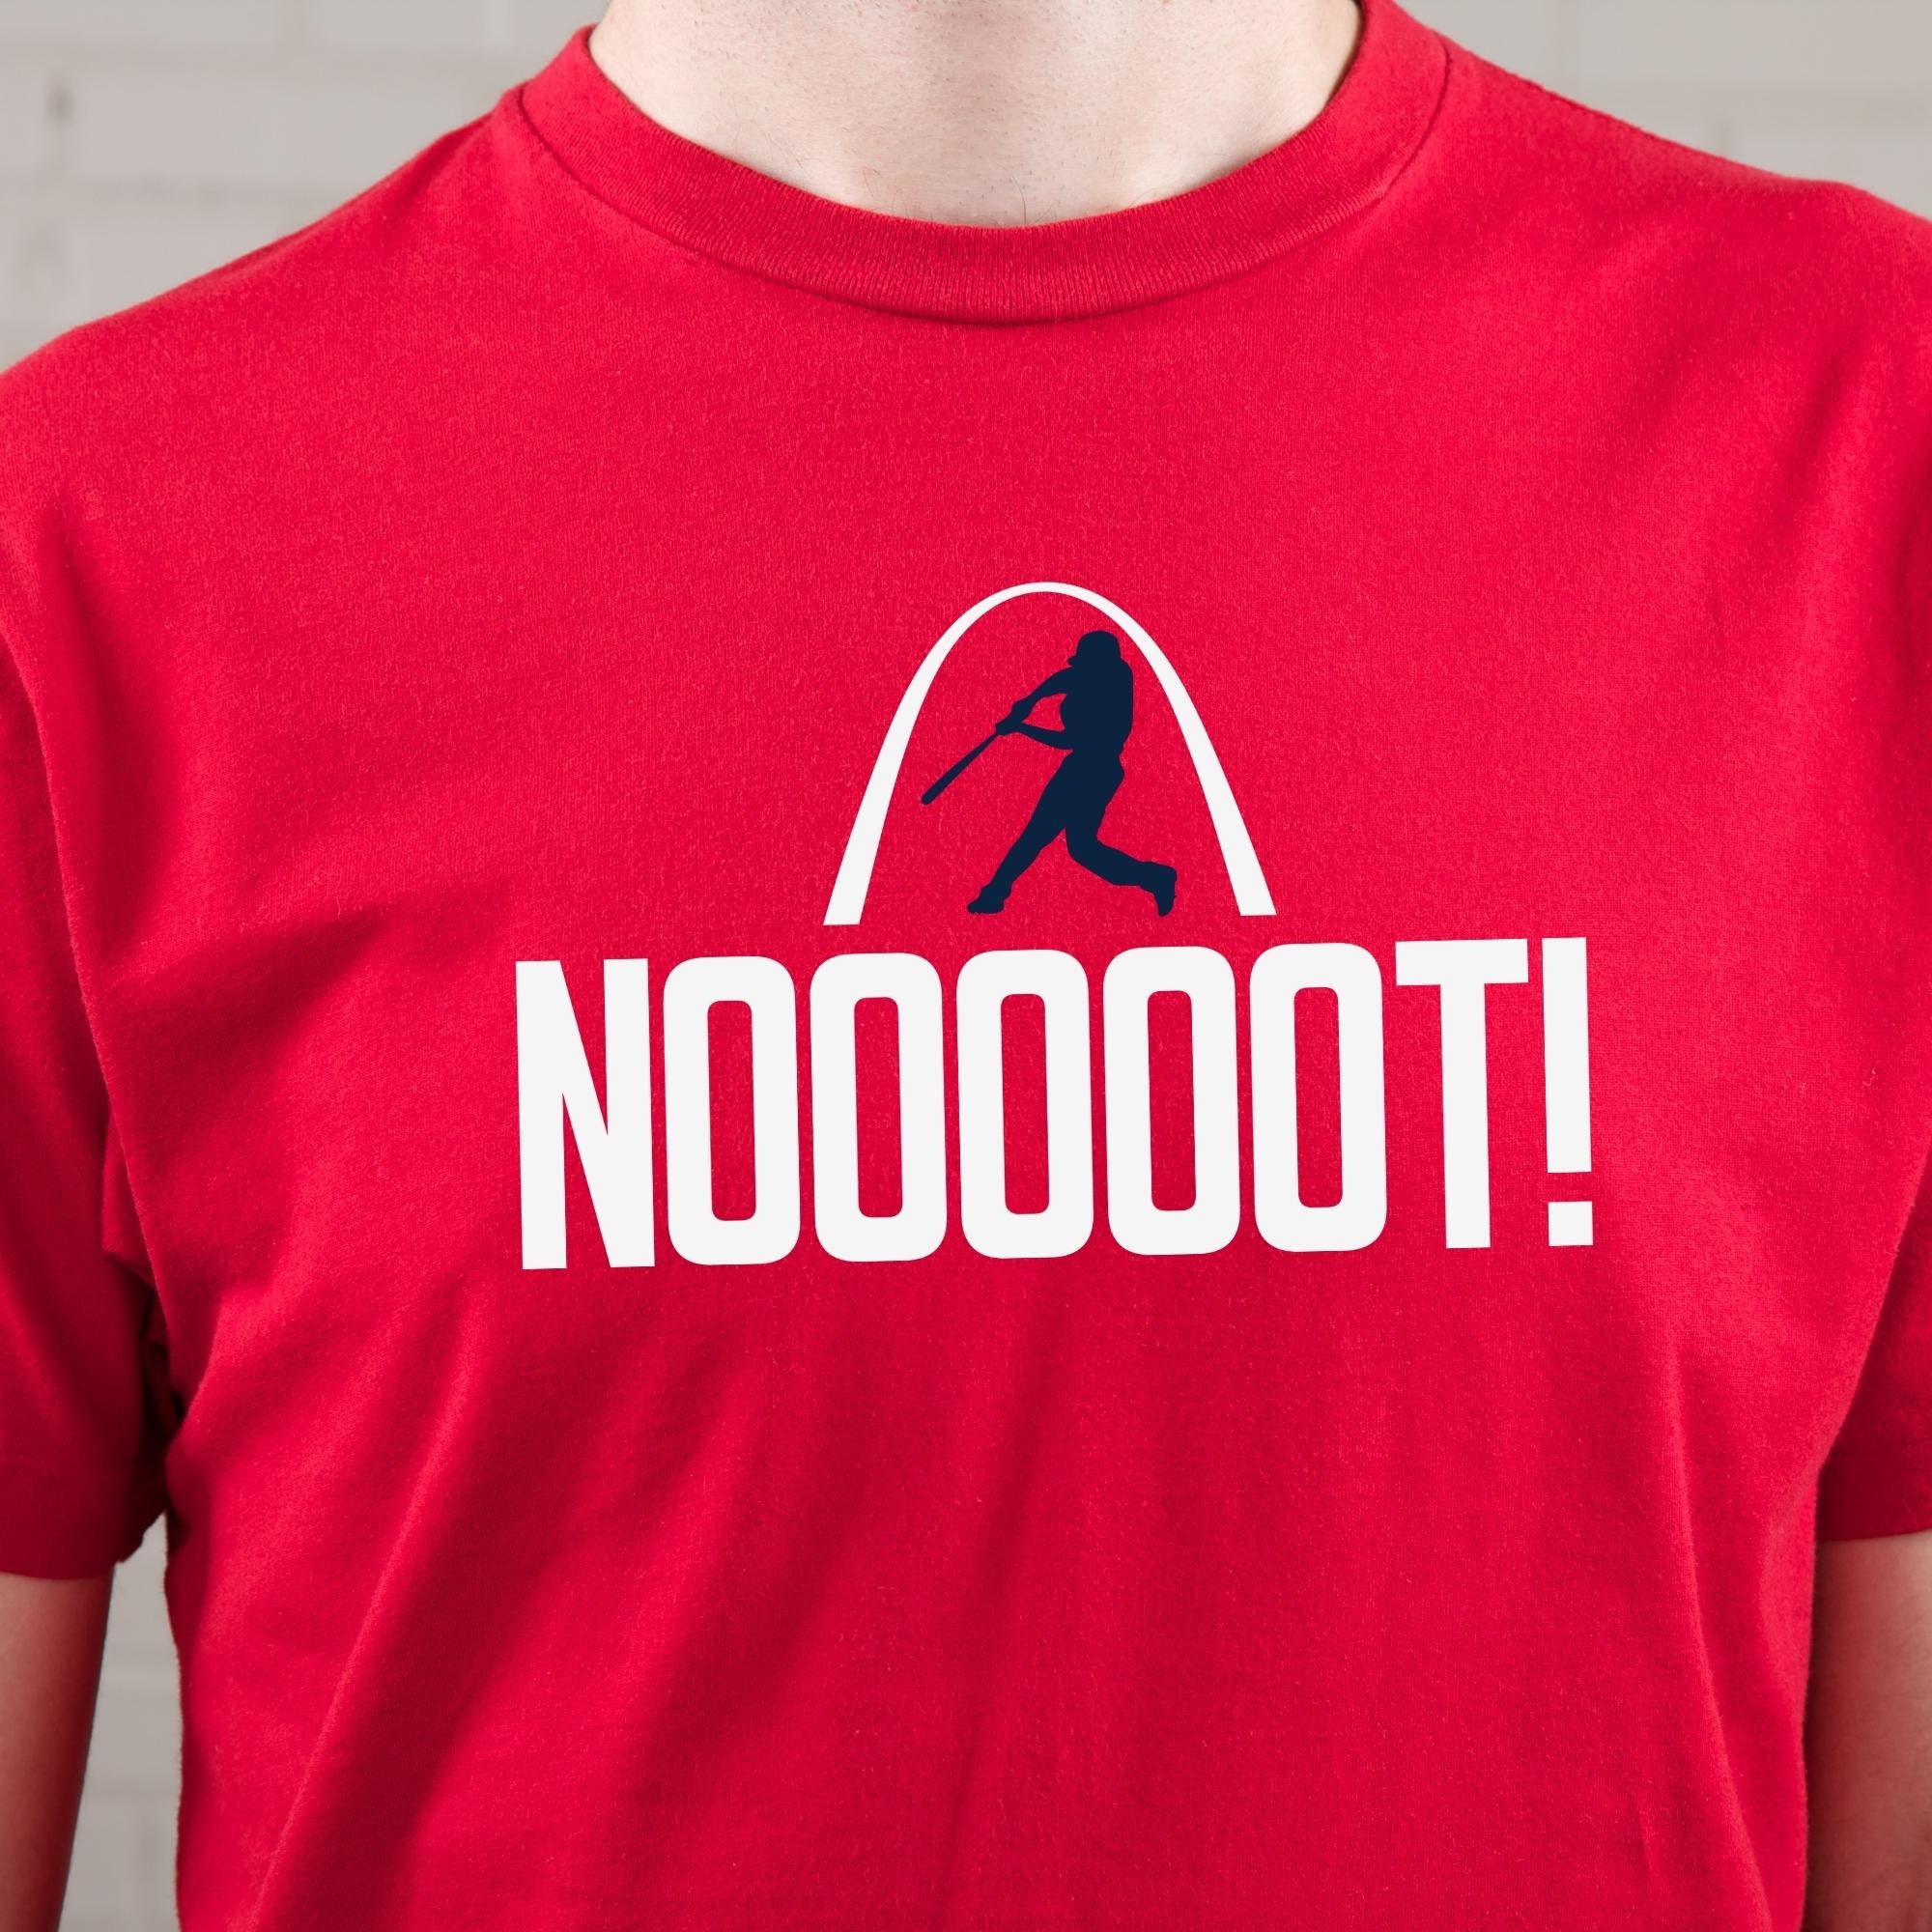 Lars Nootbaar: NOOOOOOT, Youth T-Shirt / Large - MLB - Sports Fan Gear | breakingt